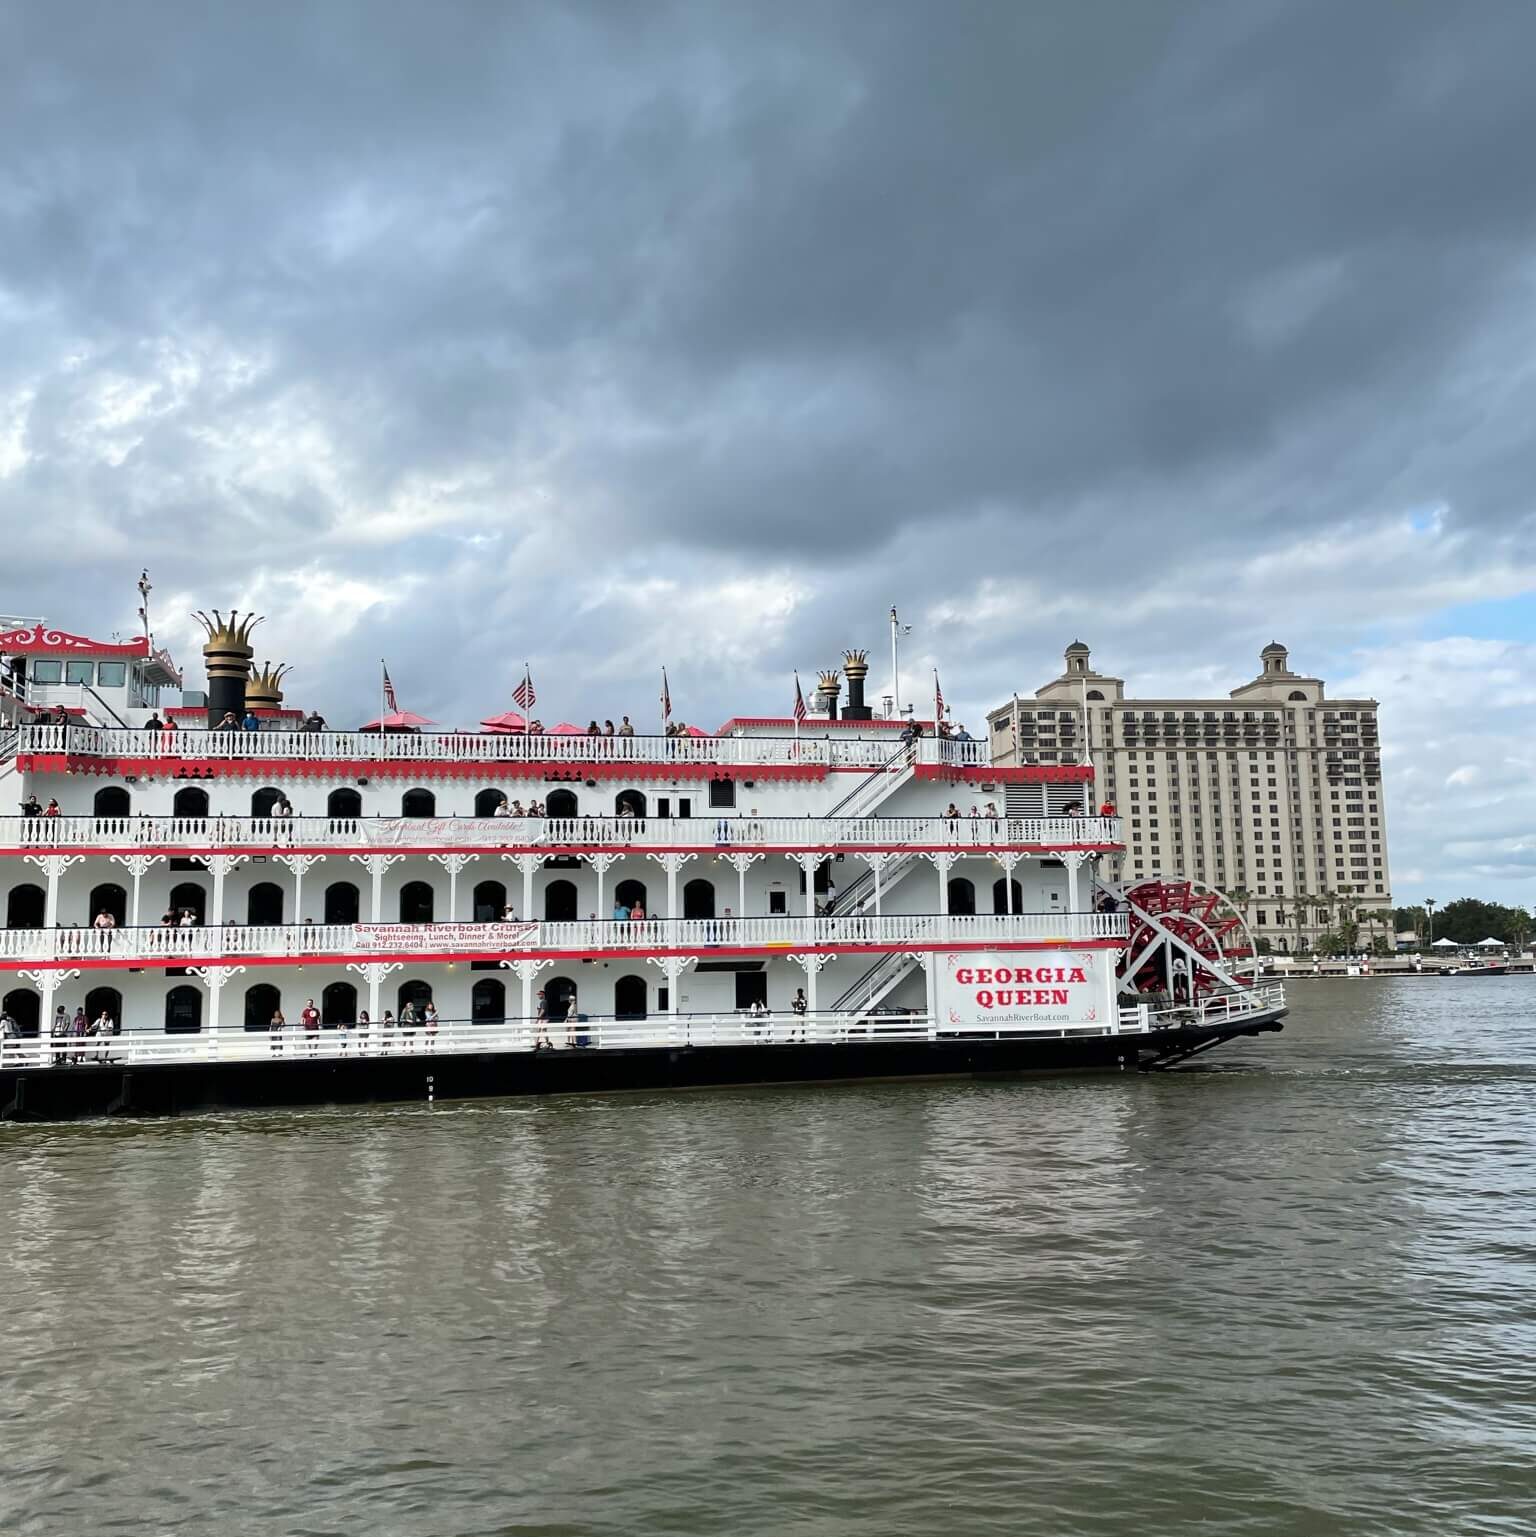 Georgia Queen boat in Savannah